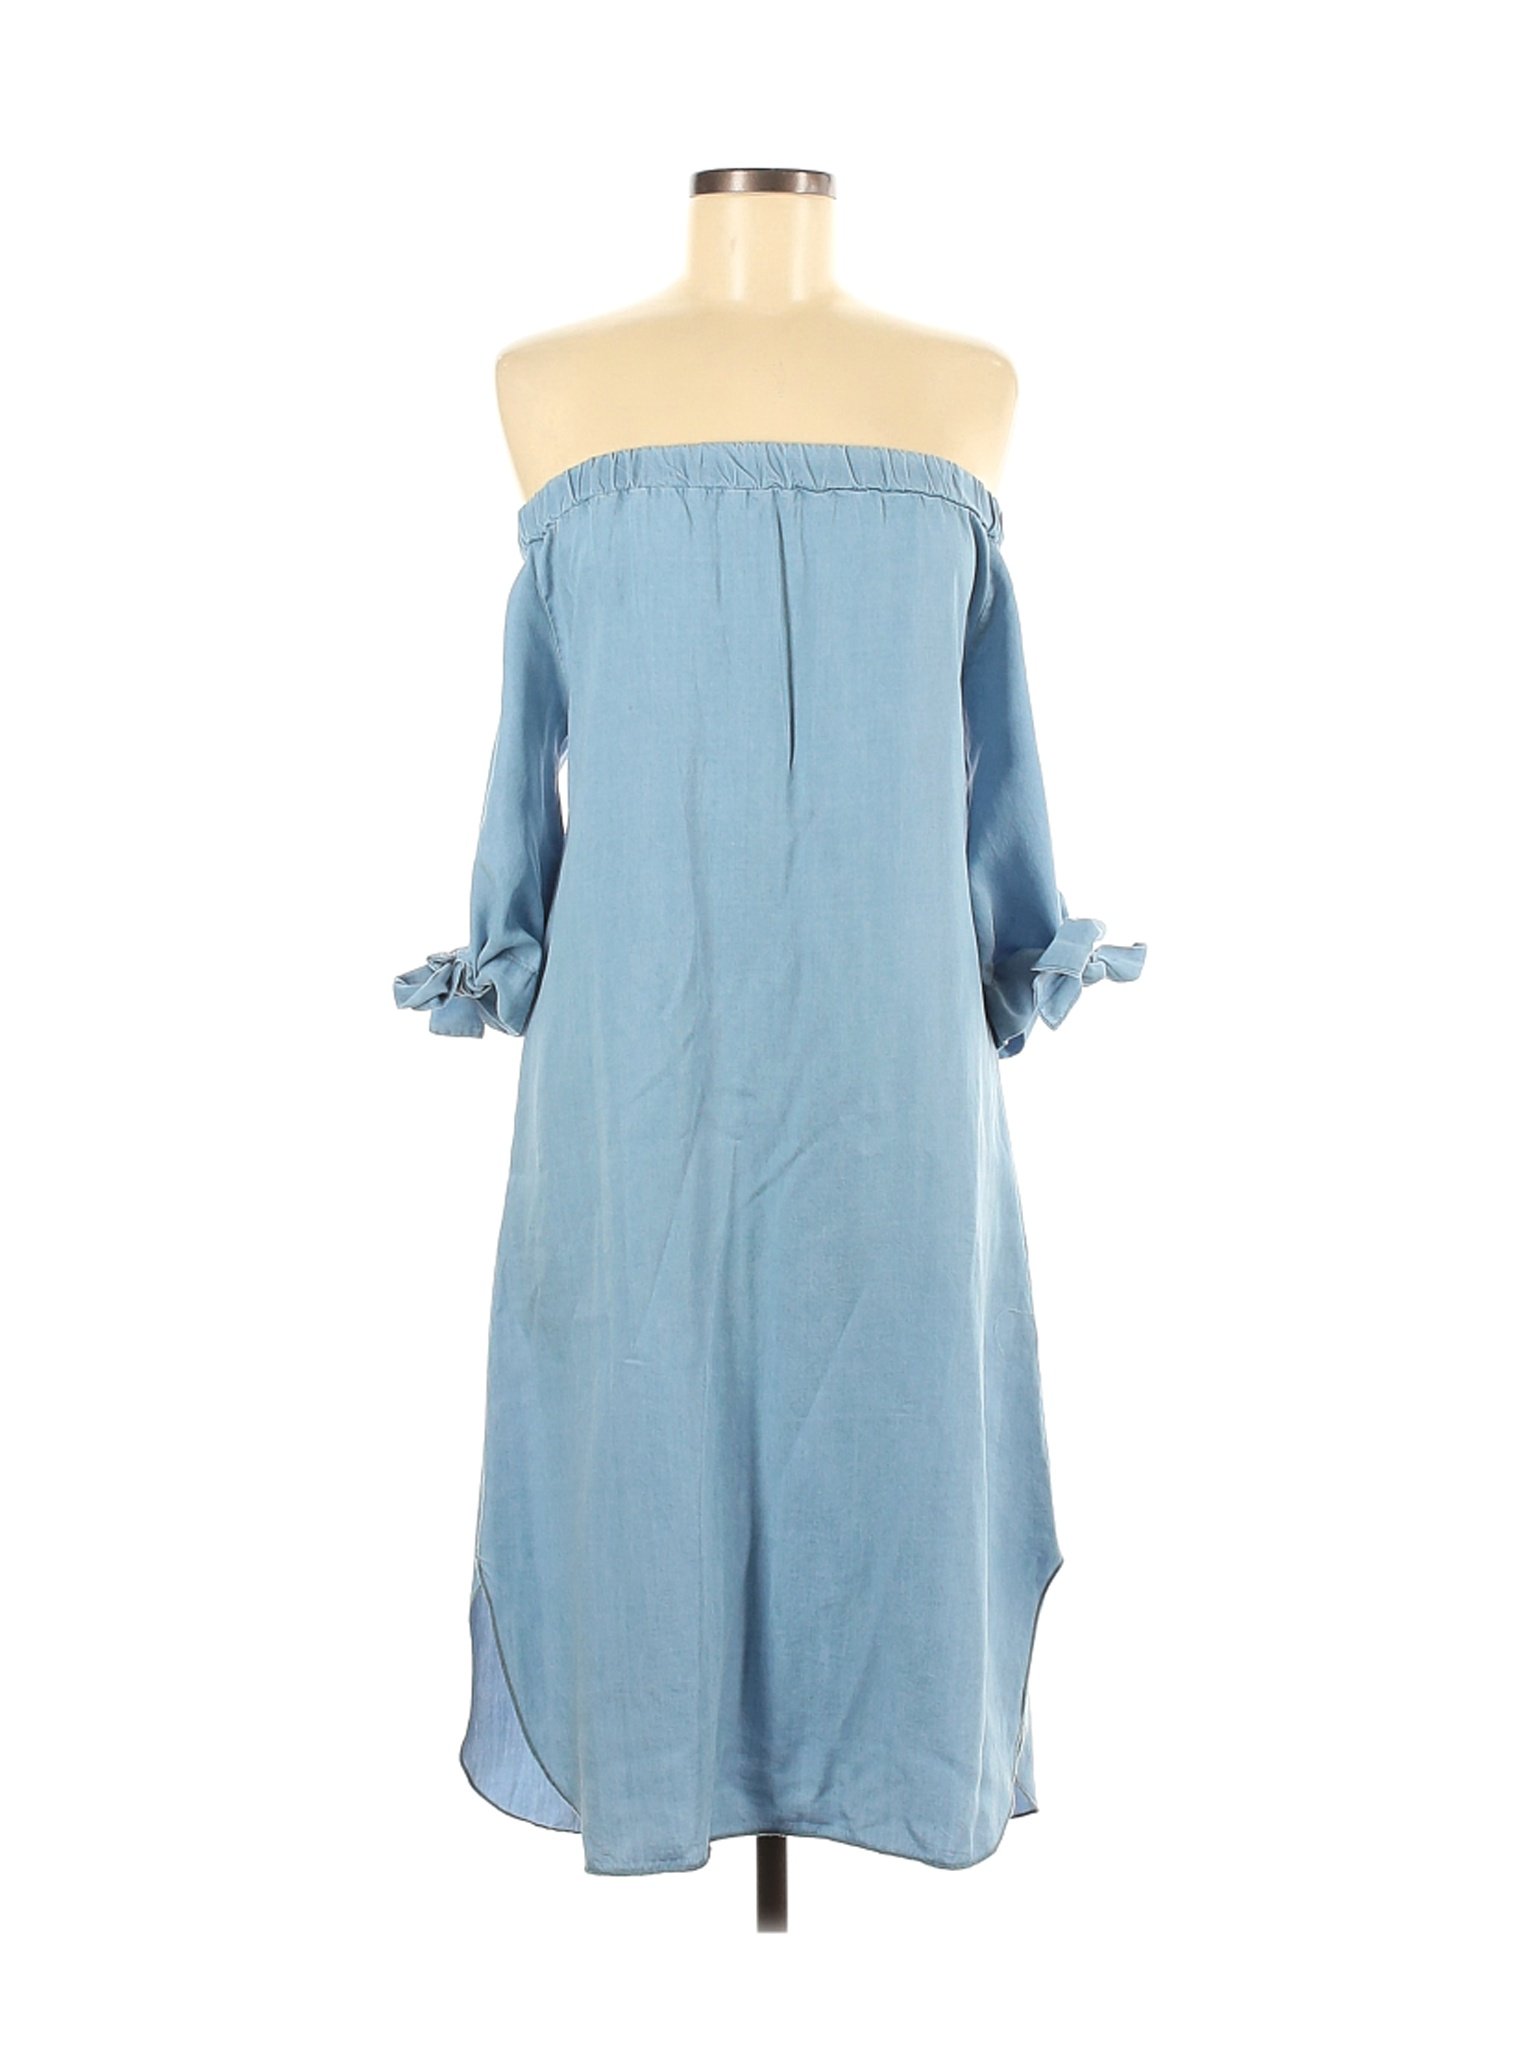 NWT Angela Mara Women Blue Casual Dress S | eBay